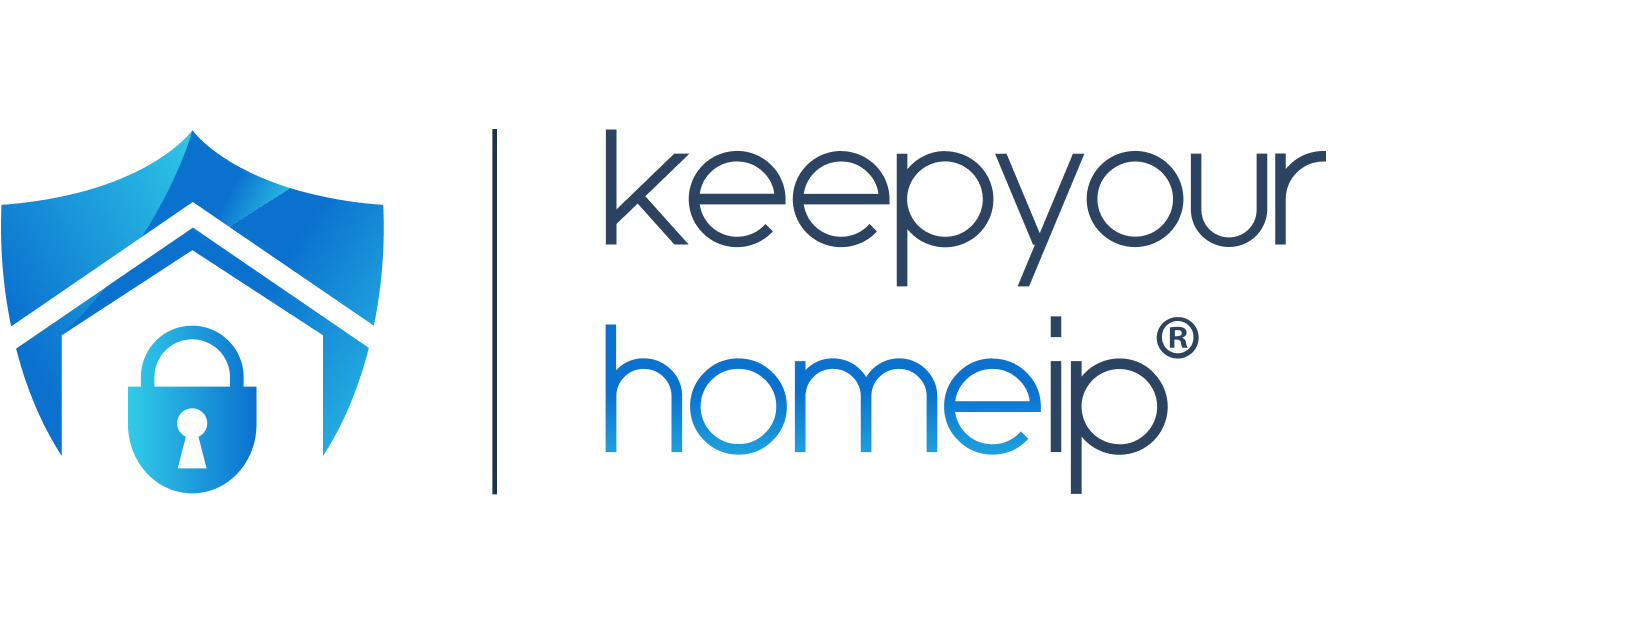 Keep Your Home IP logo